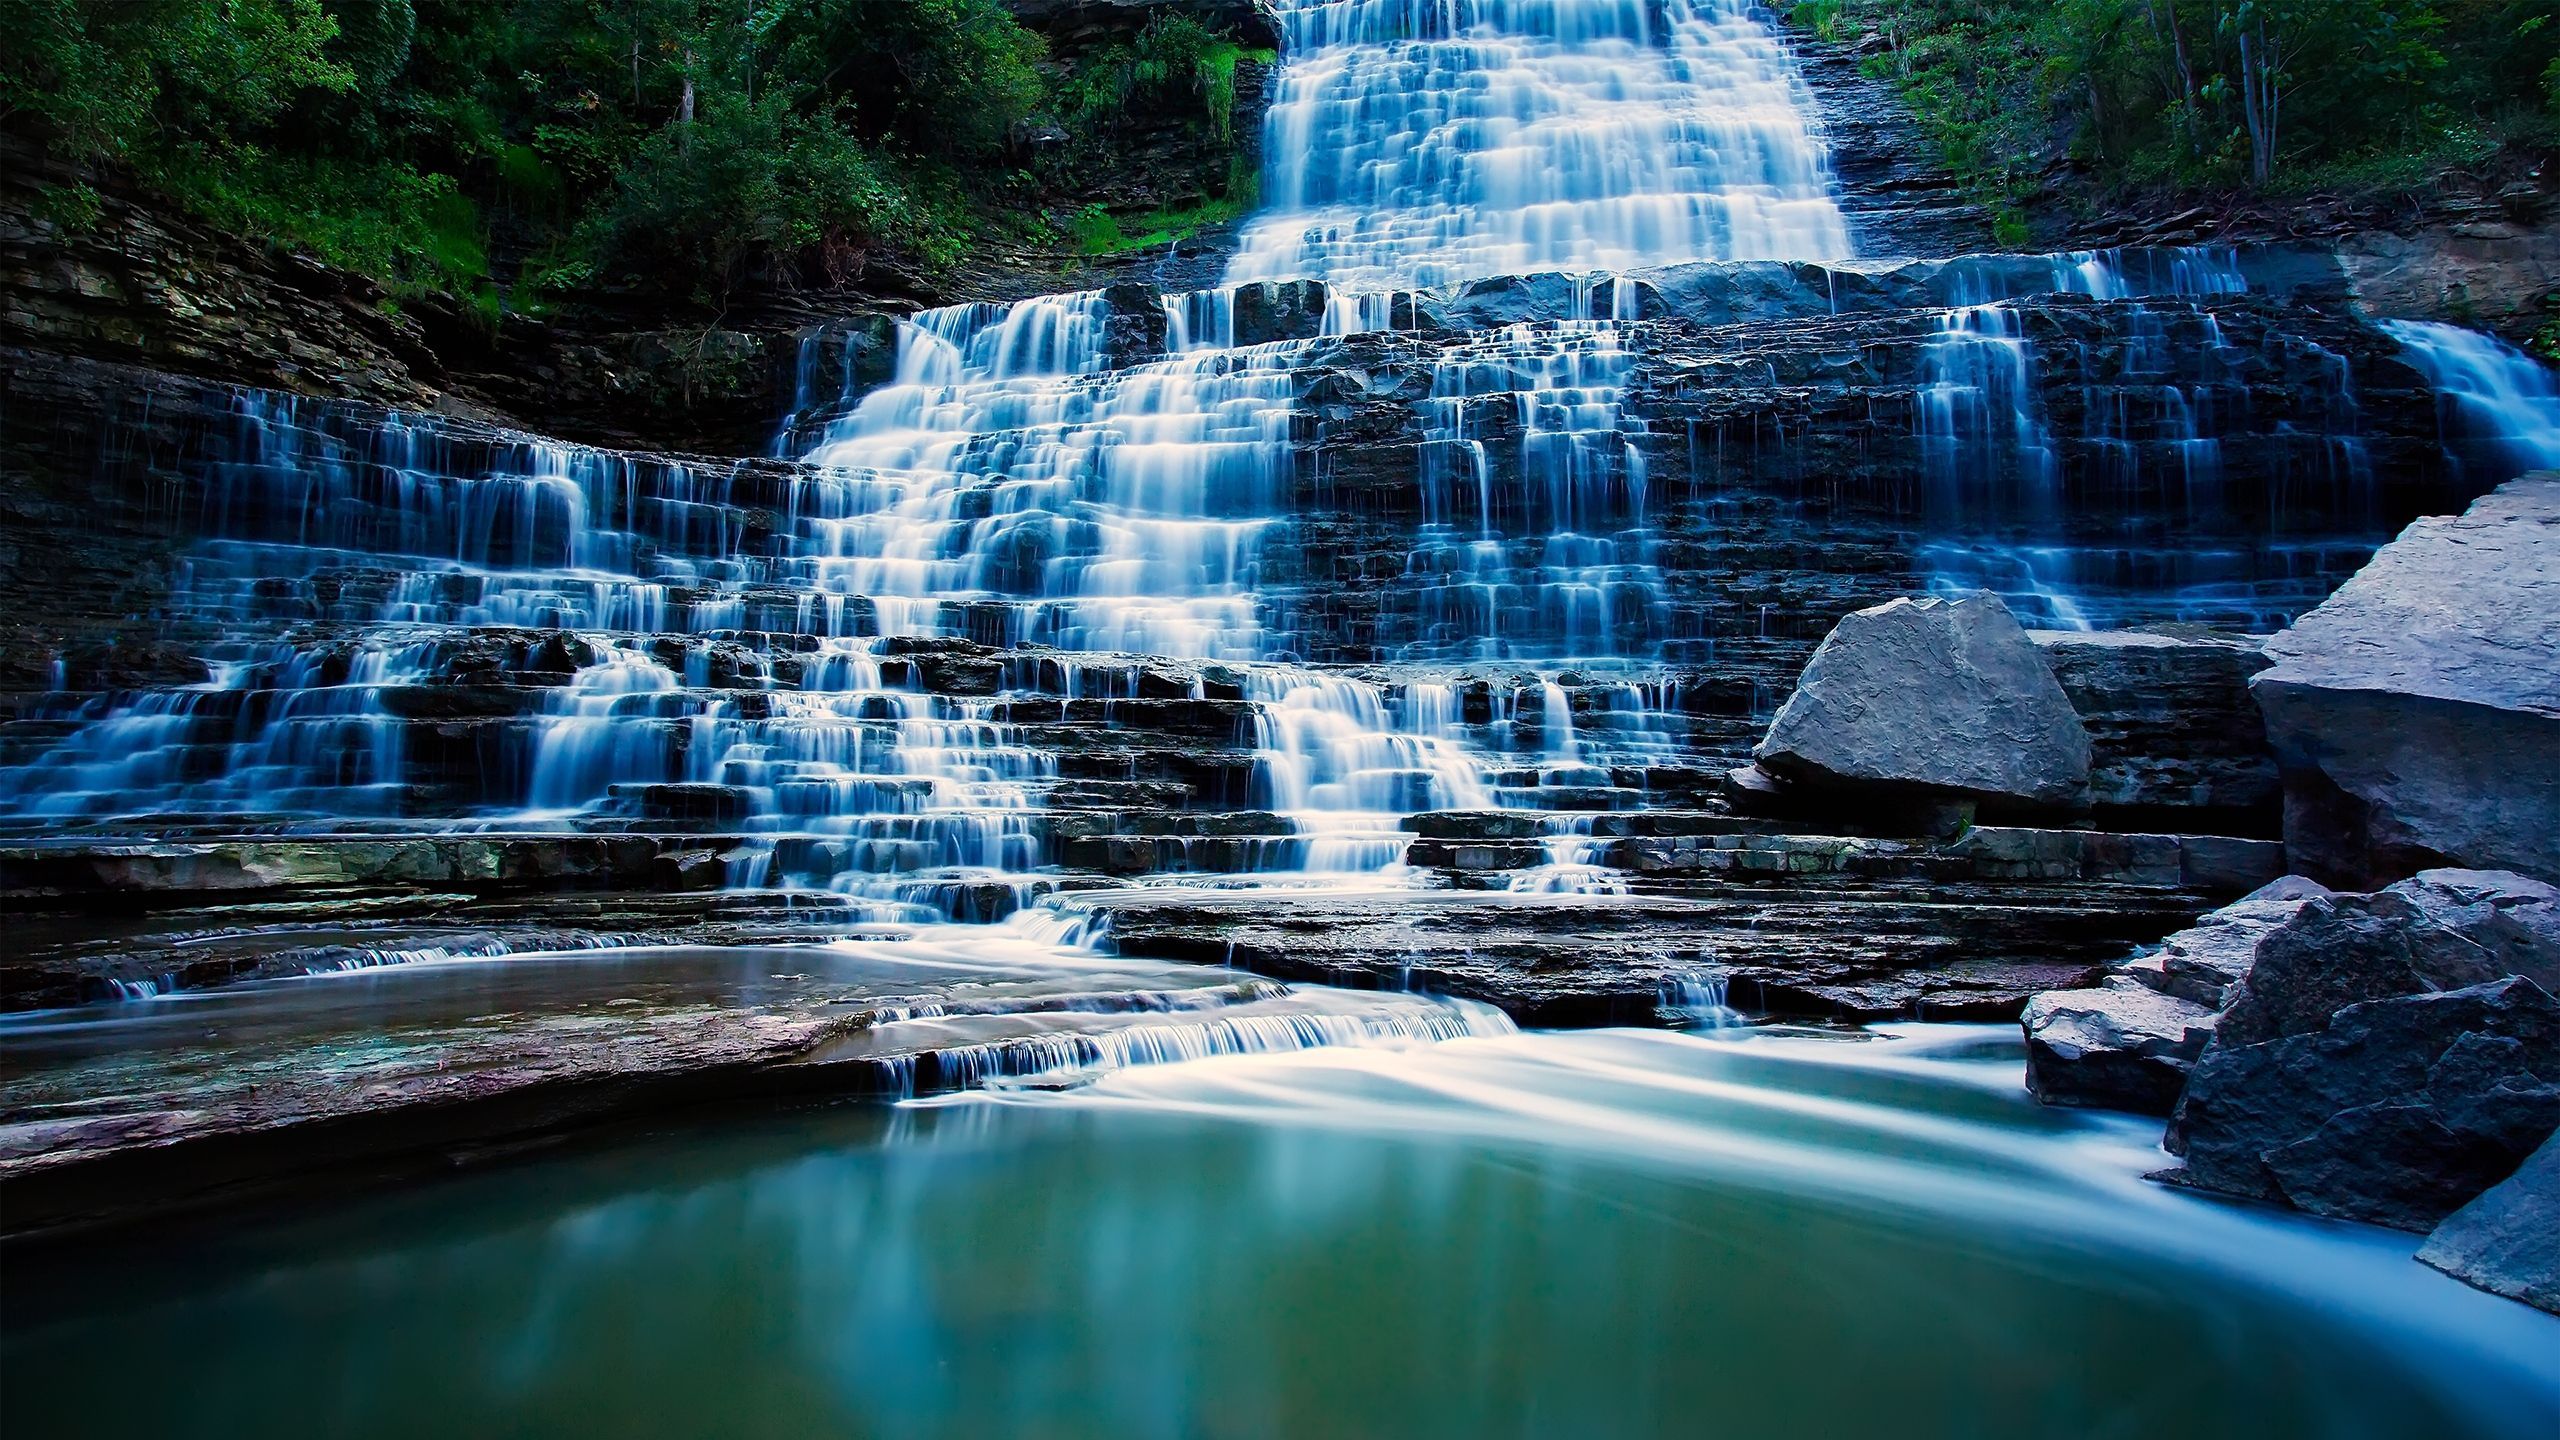 Download Wallpaper 2560x1440 Waterfall, River, Beautiful Mac iMac